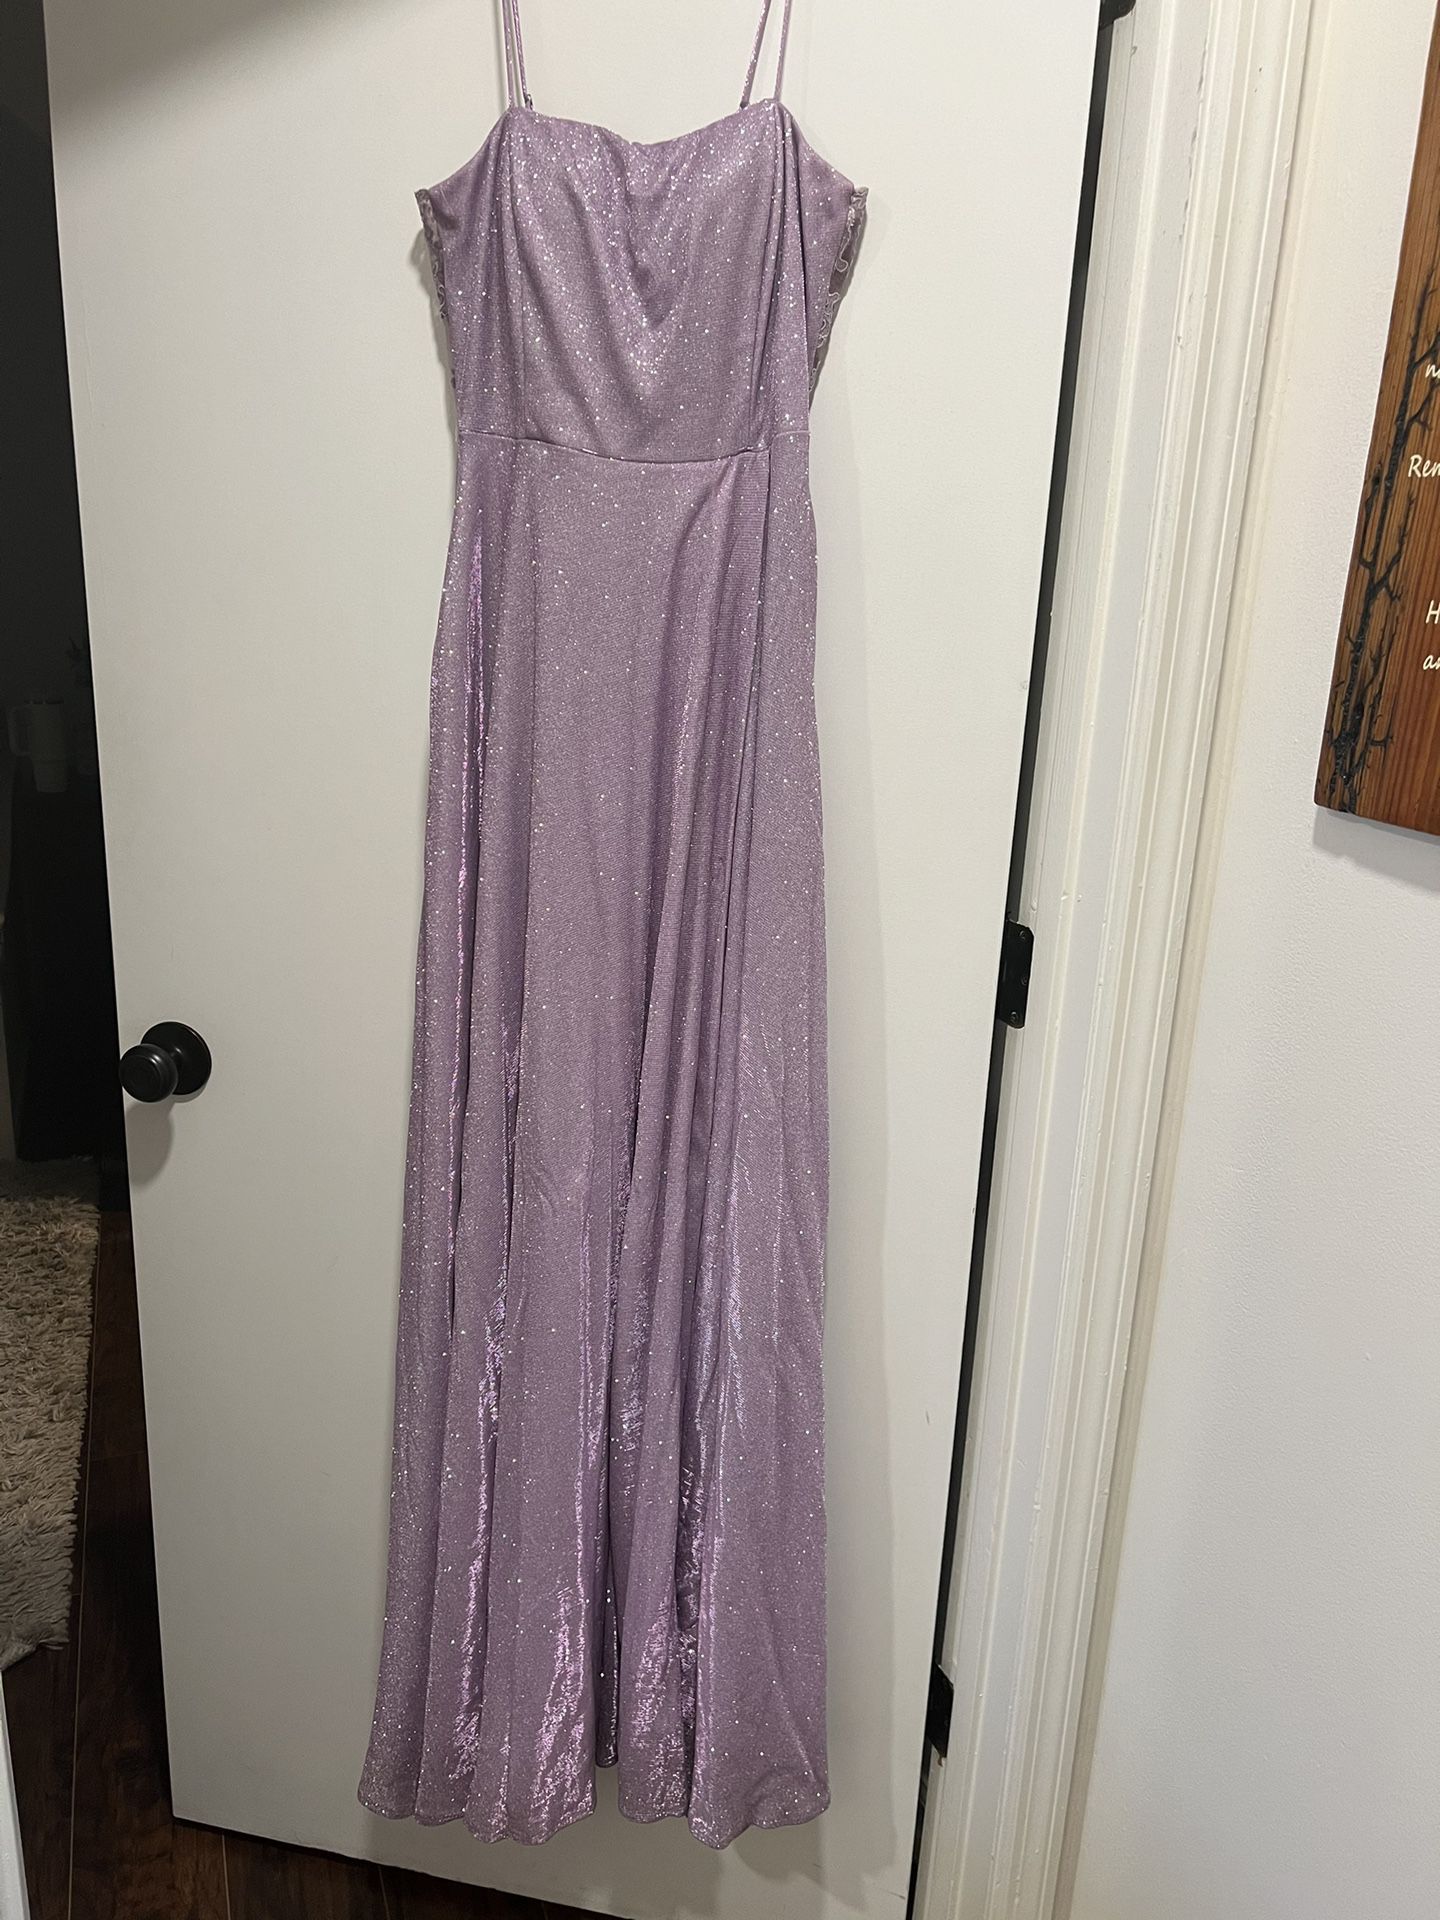 size medium purple prom dress